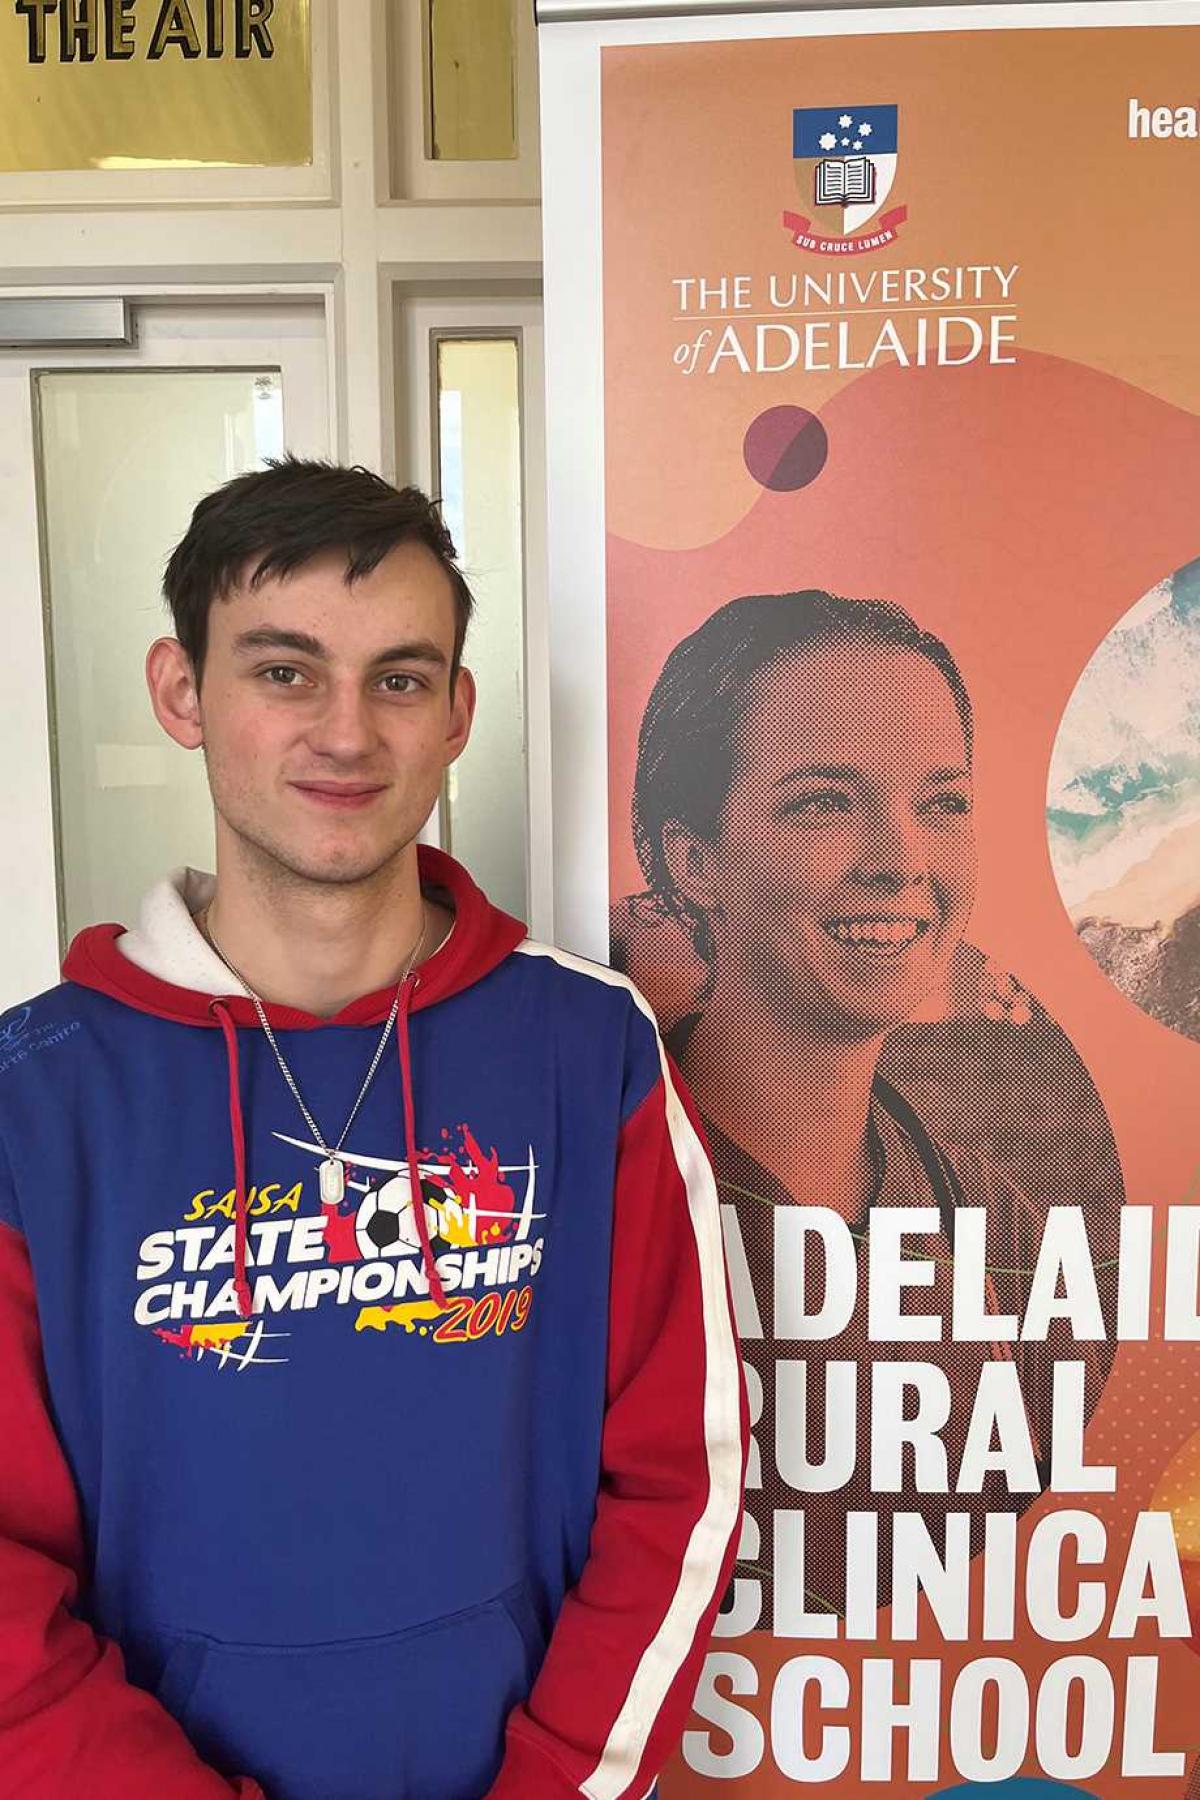 Tarran Dun standing next to Adelaide Rural Clinical School banner